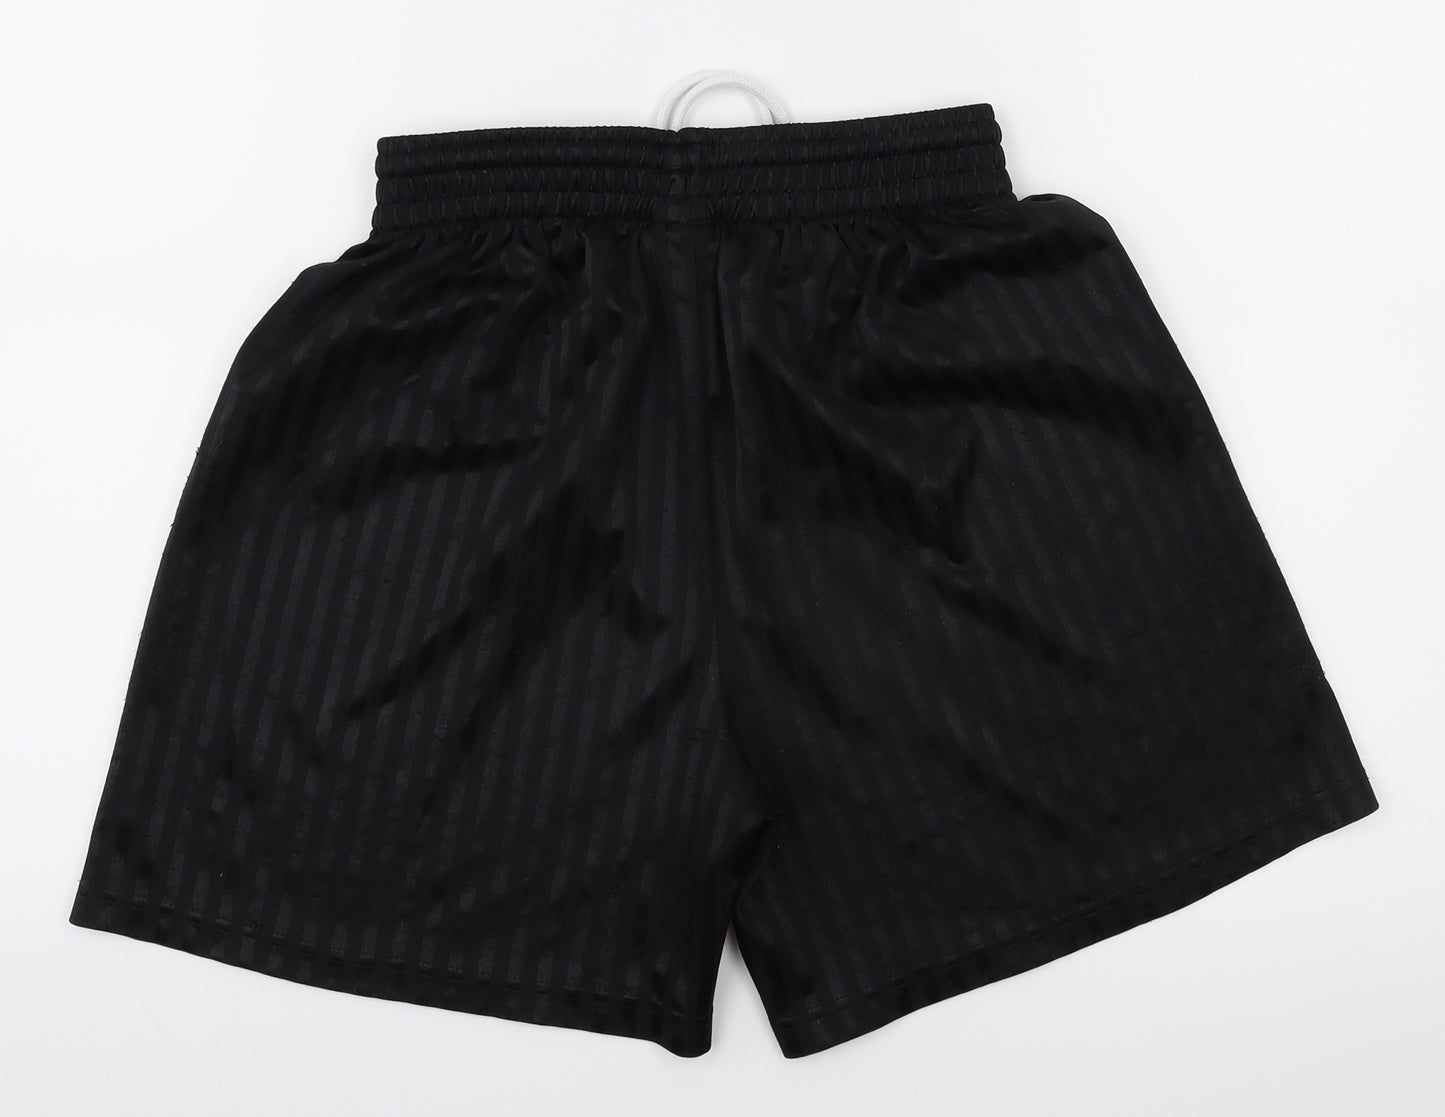 Prostar Mens Black   Sweat Shorts Size S - Stretch waistband